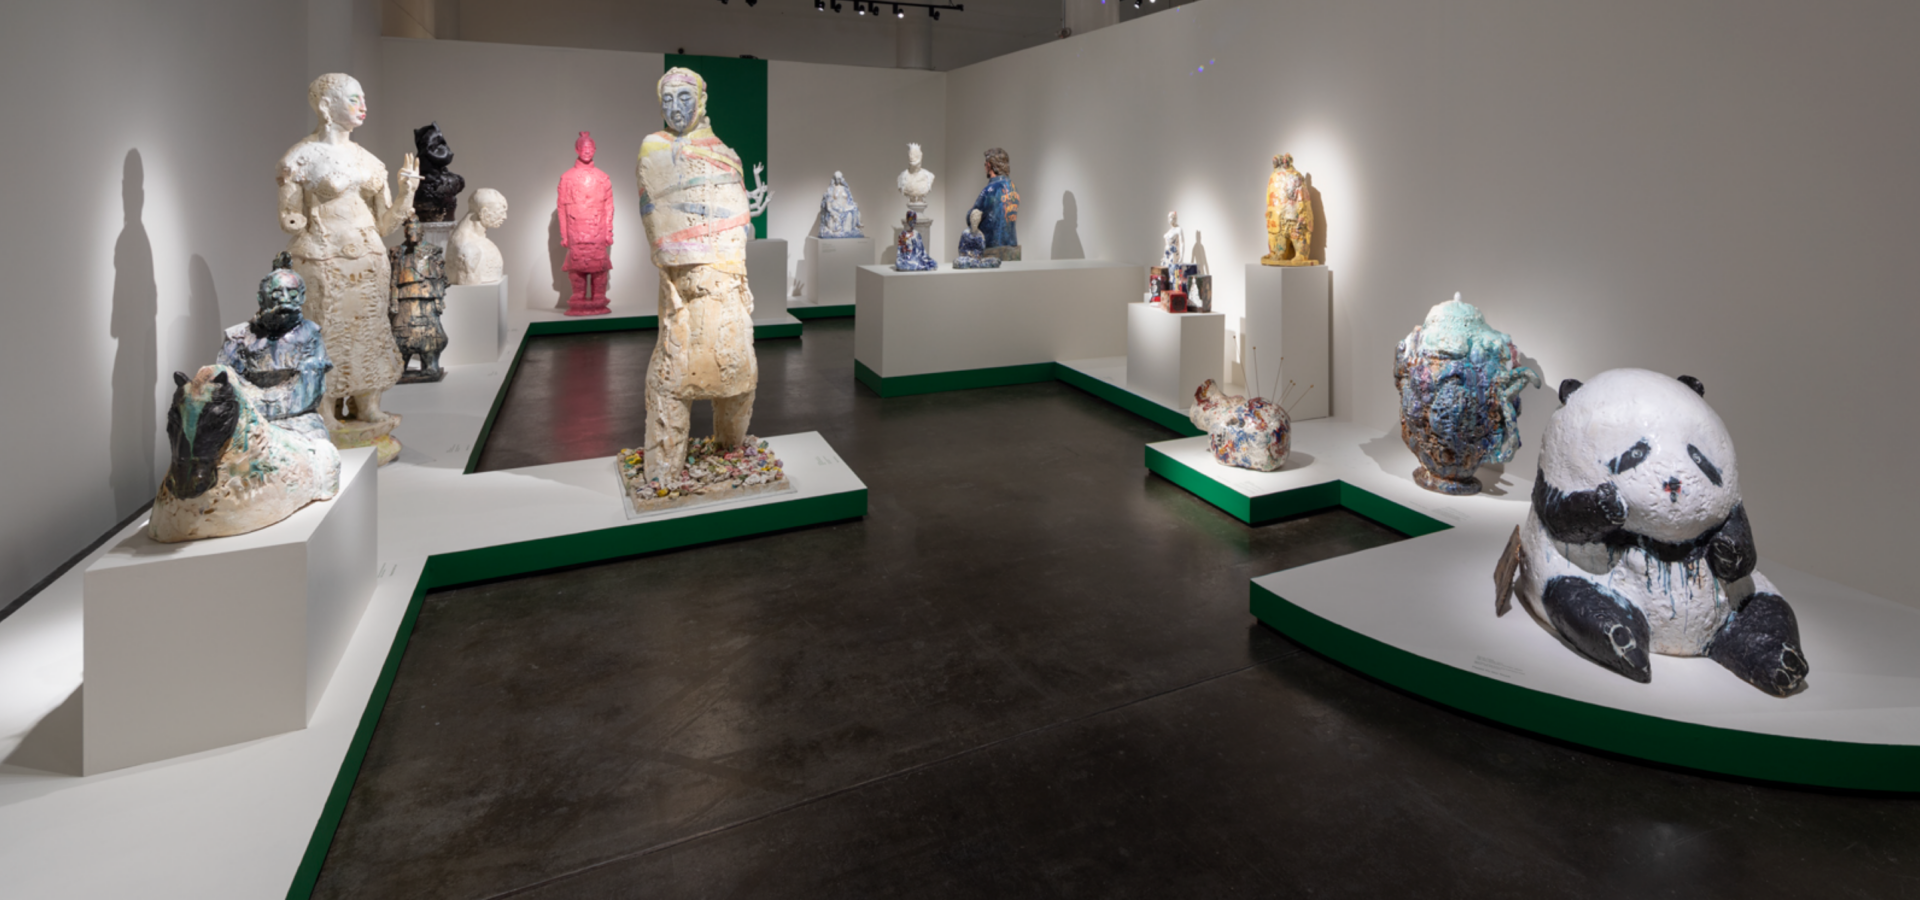 Ceramic sculptures by Wanxin Zhang in Museum of Craft of Design galleries